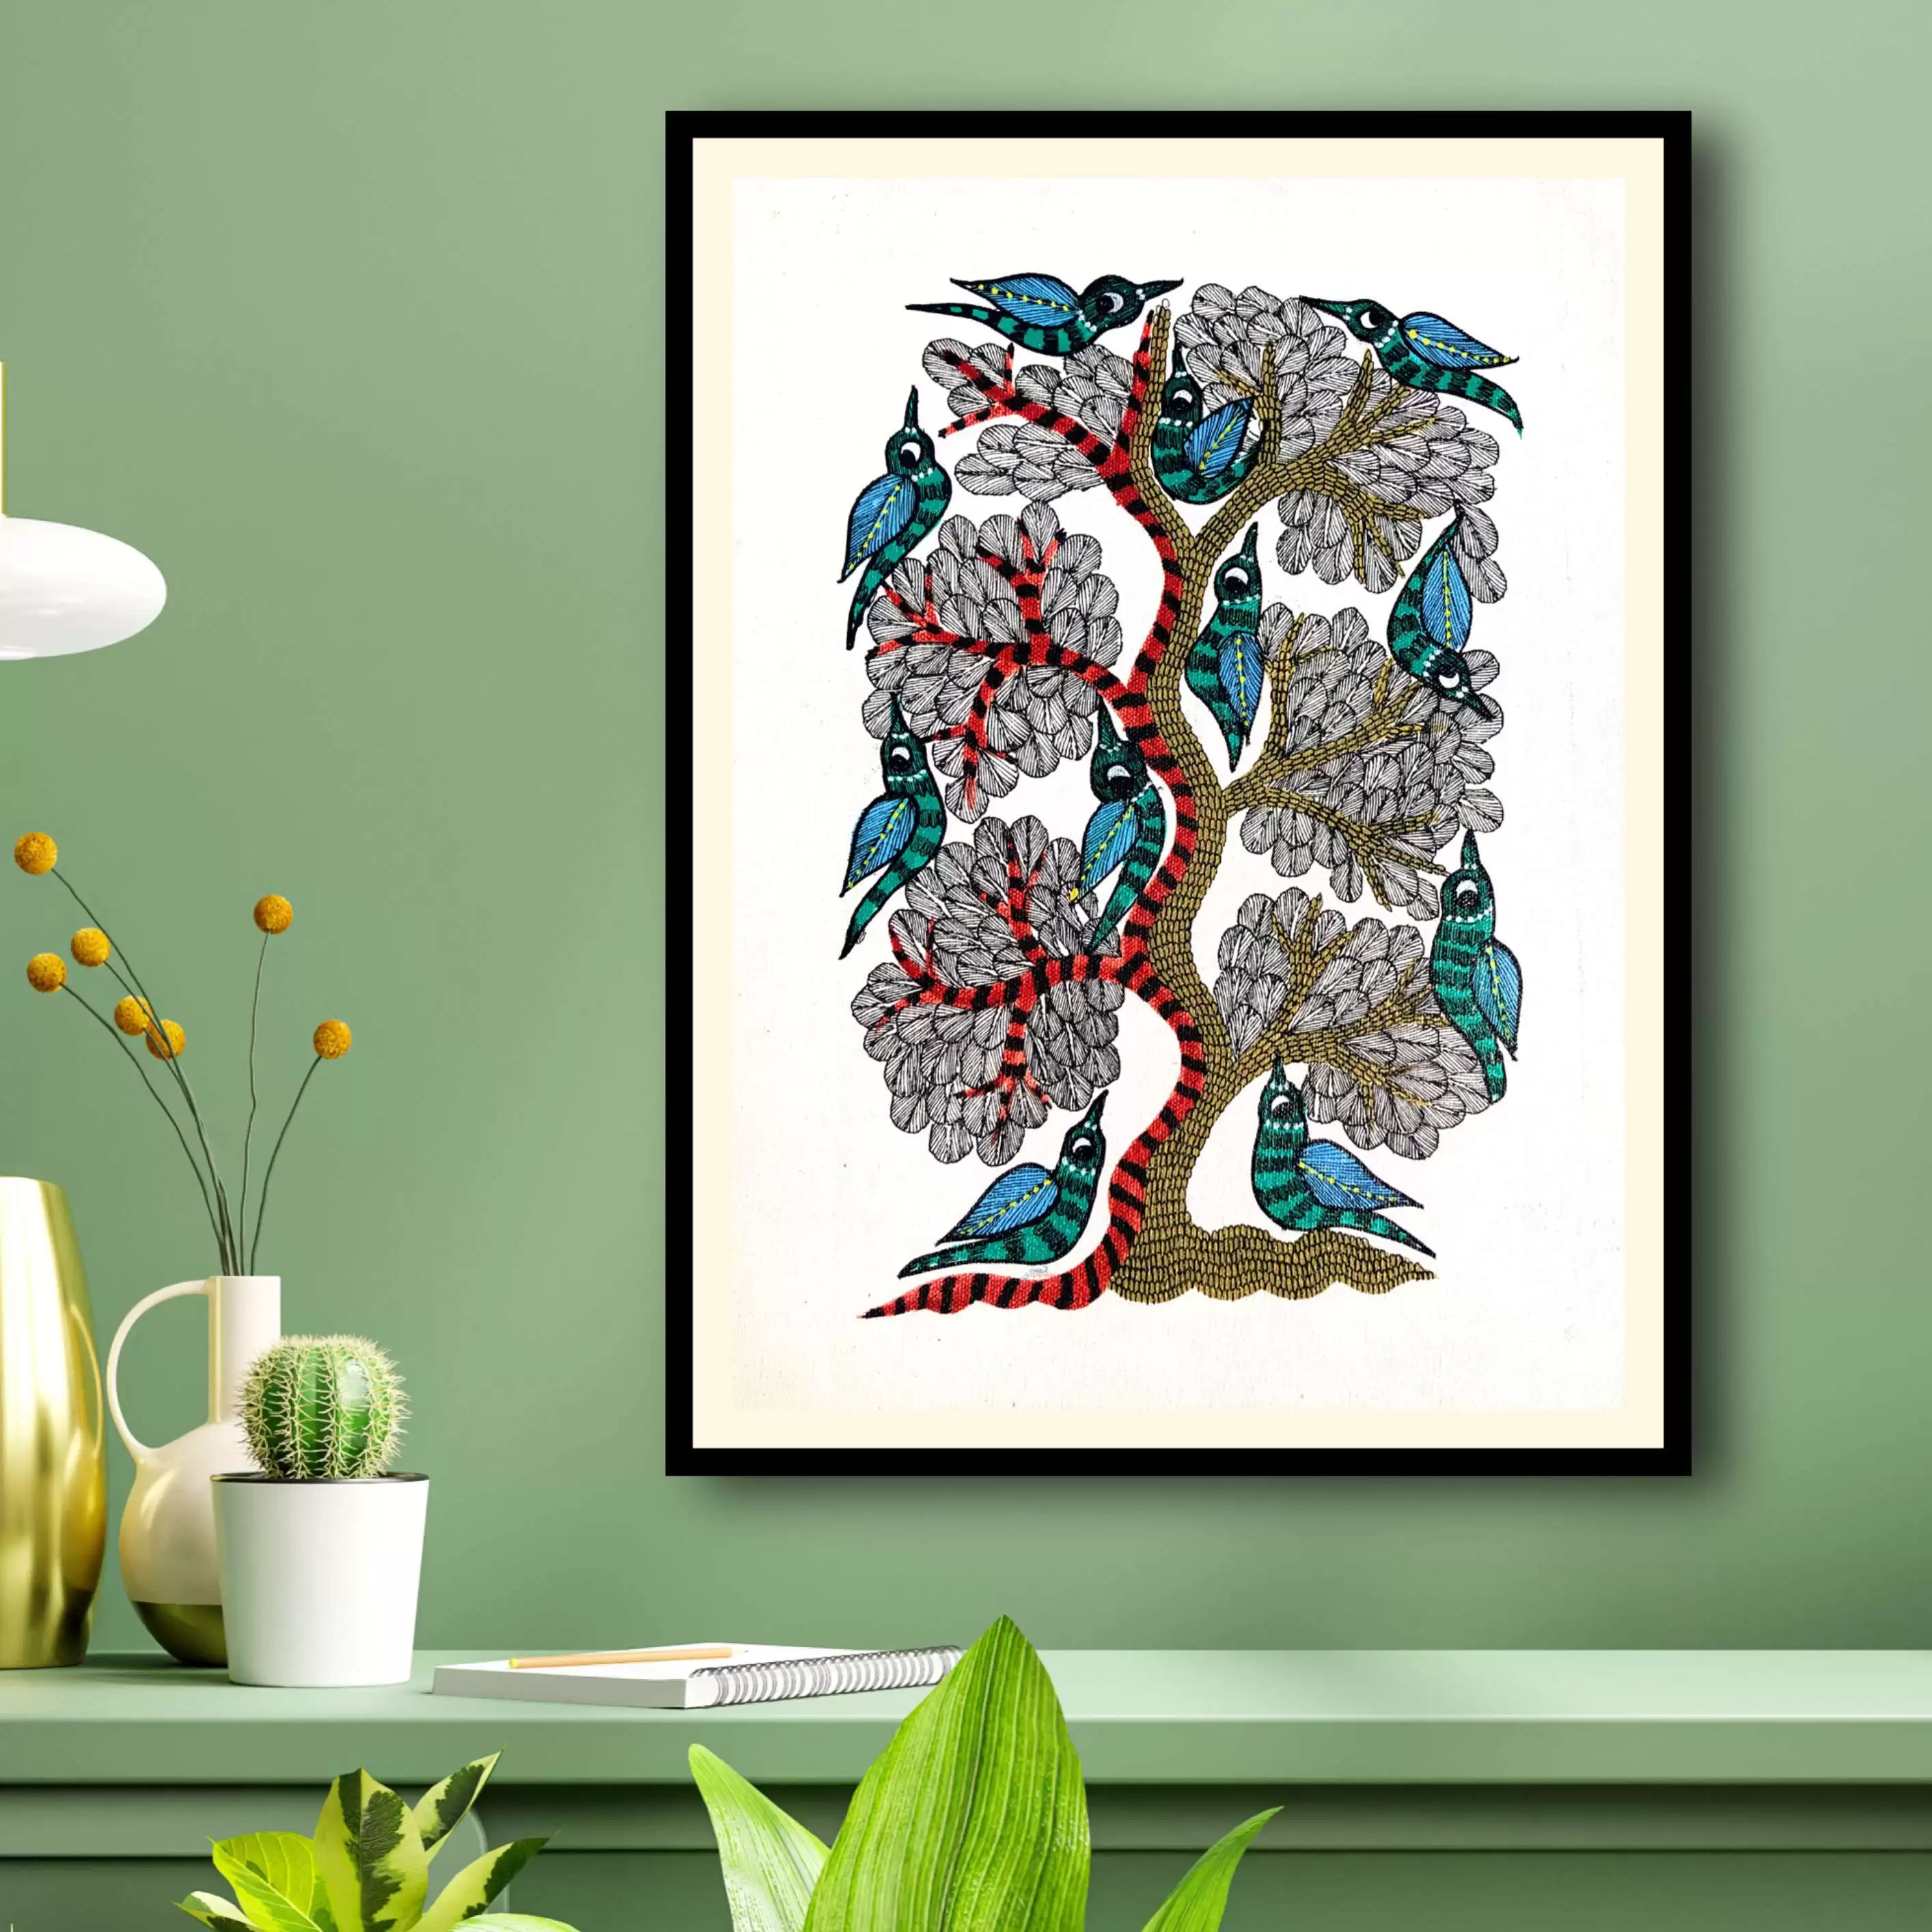 Framed Madhubani Art painting of Tree & Birds  for Home & Office Wall Art Decor